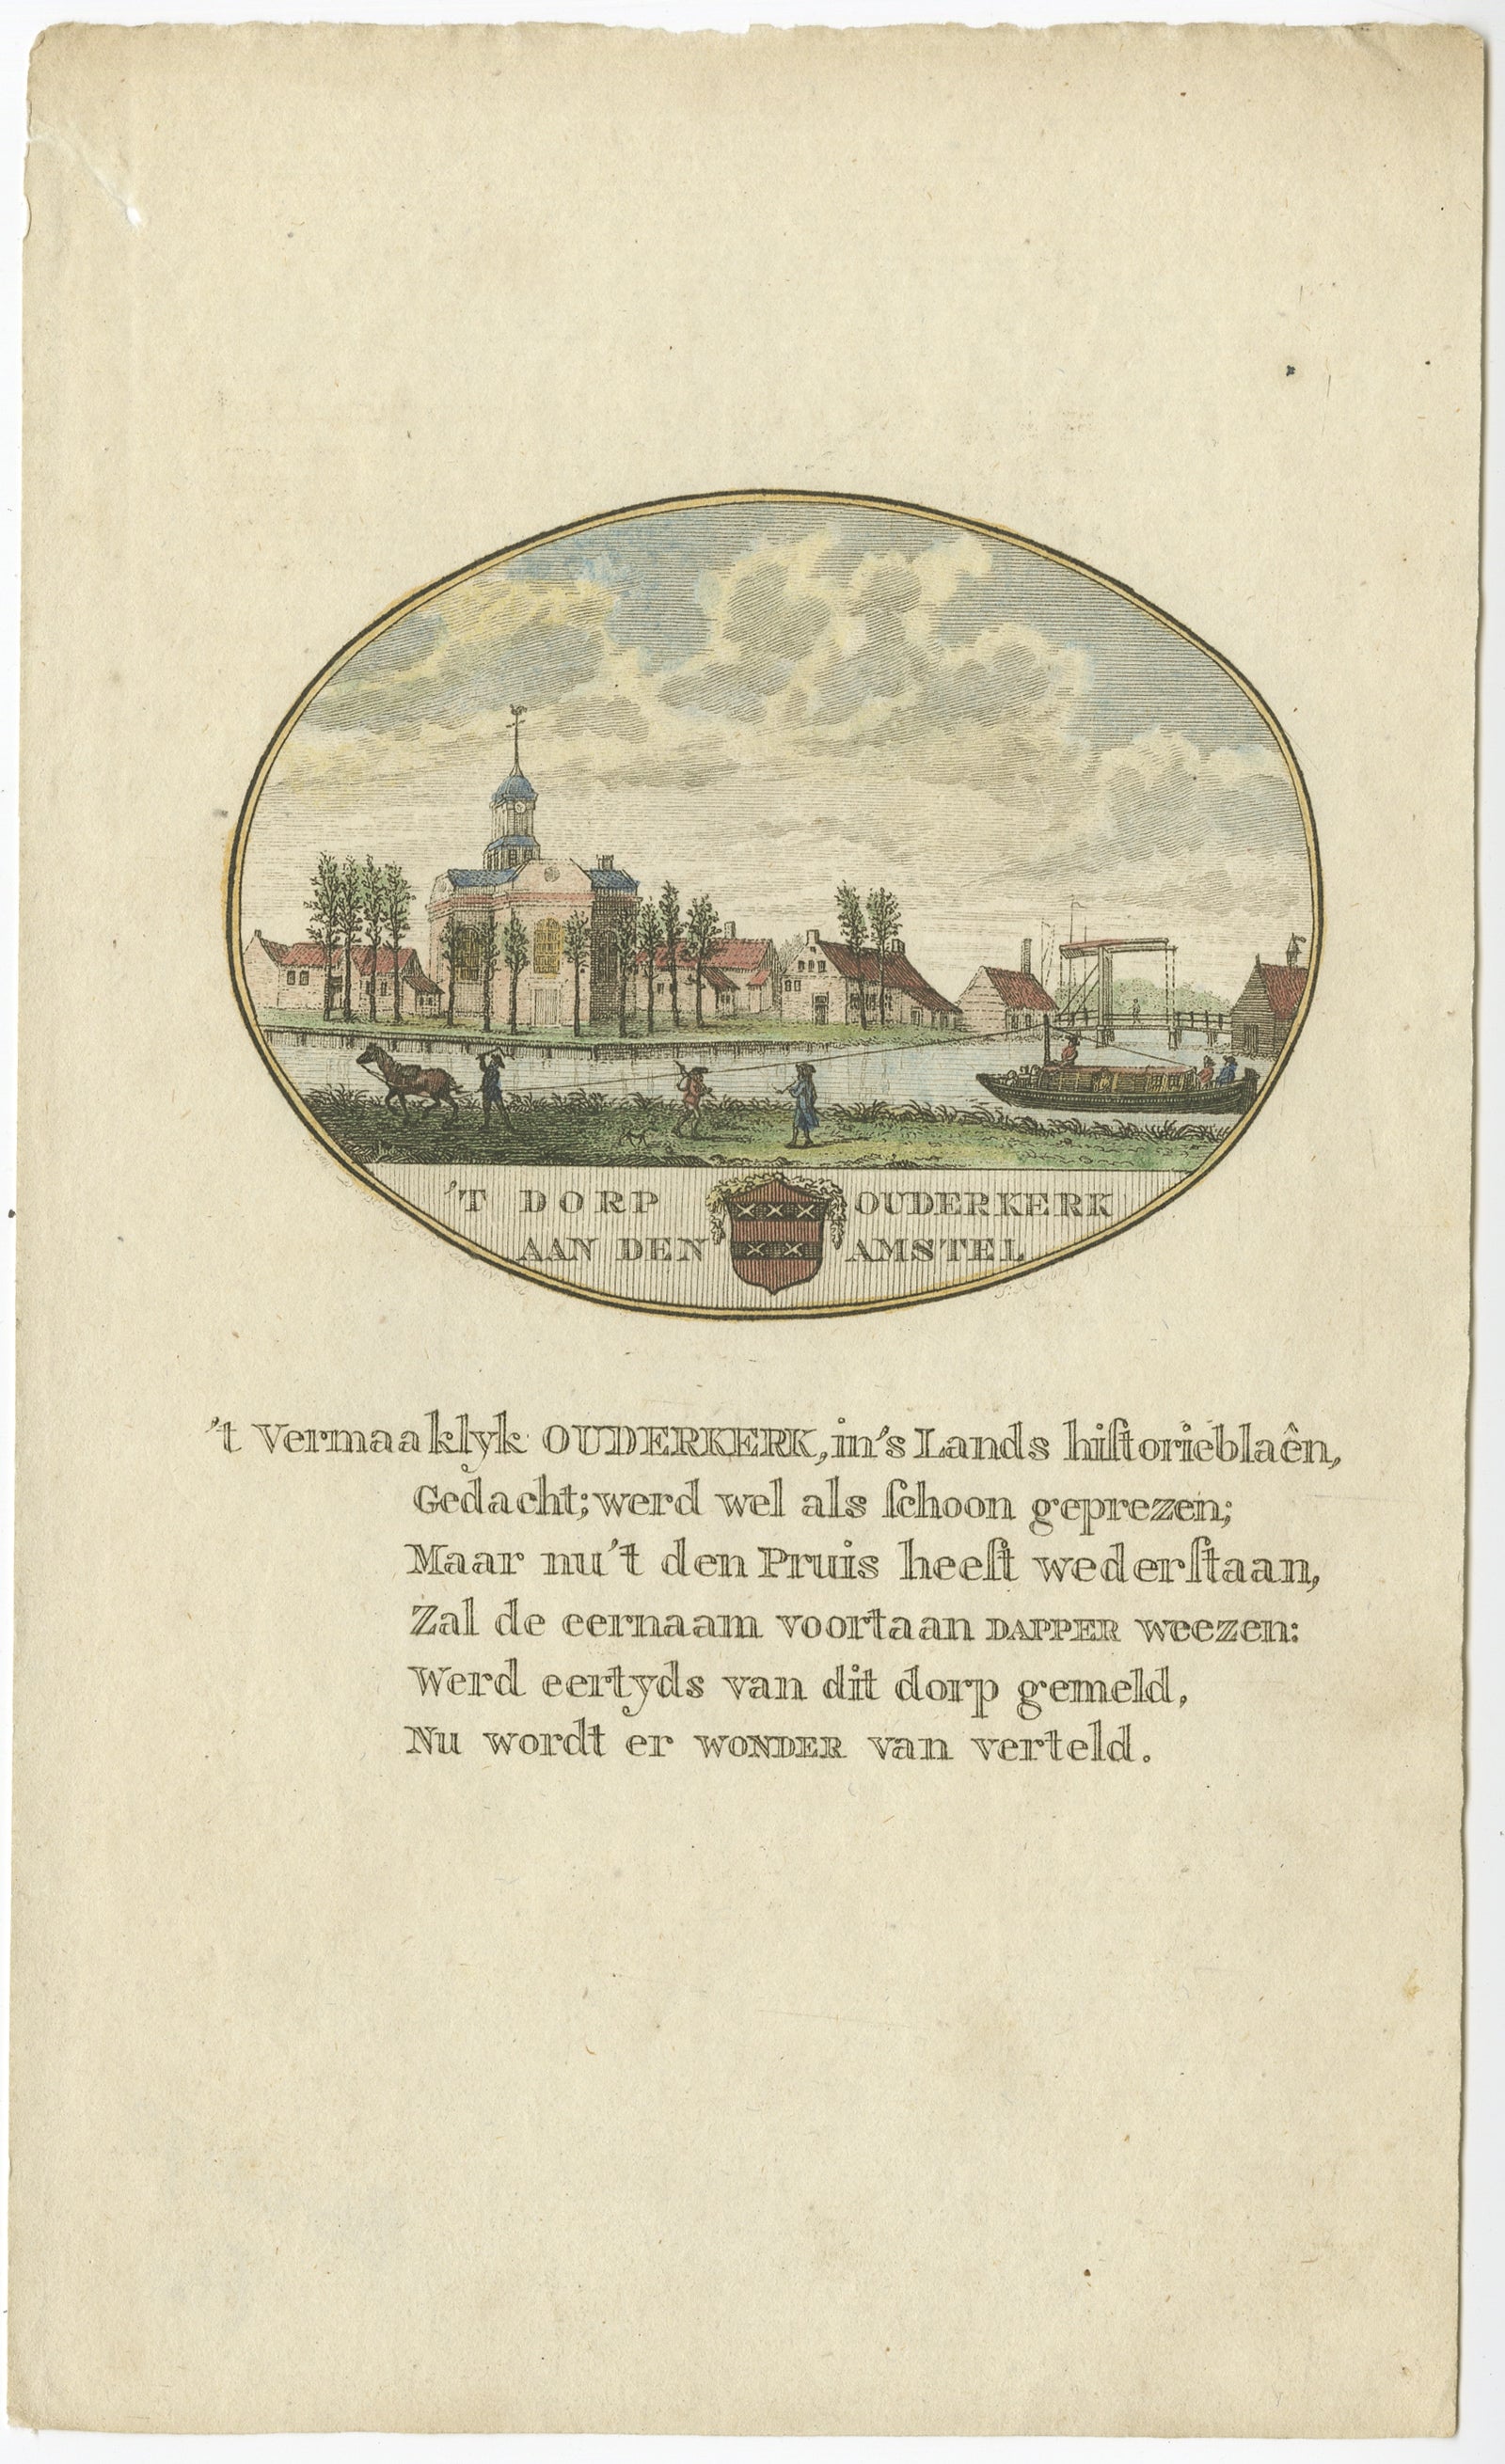 Antiker Druck der Stadt Ouderkerk aan de Amstel, Niederlande, 1795